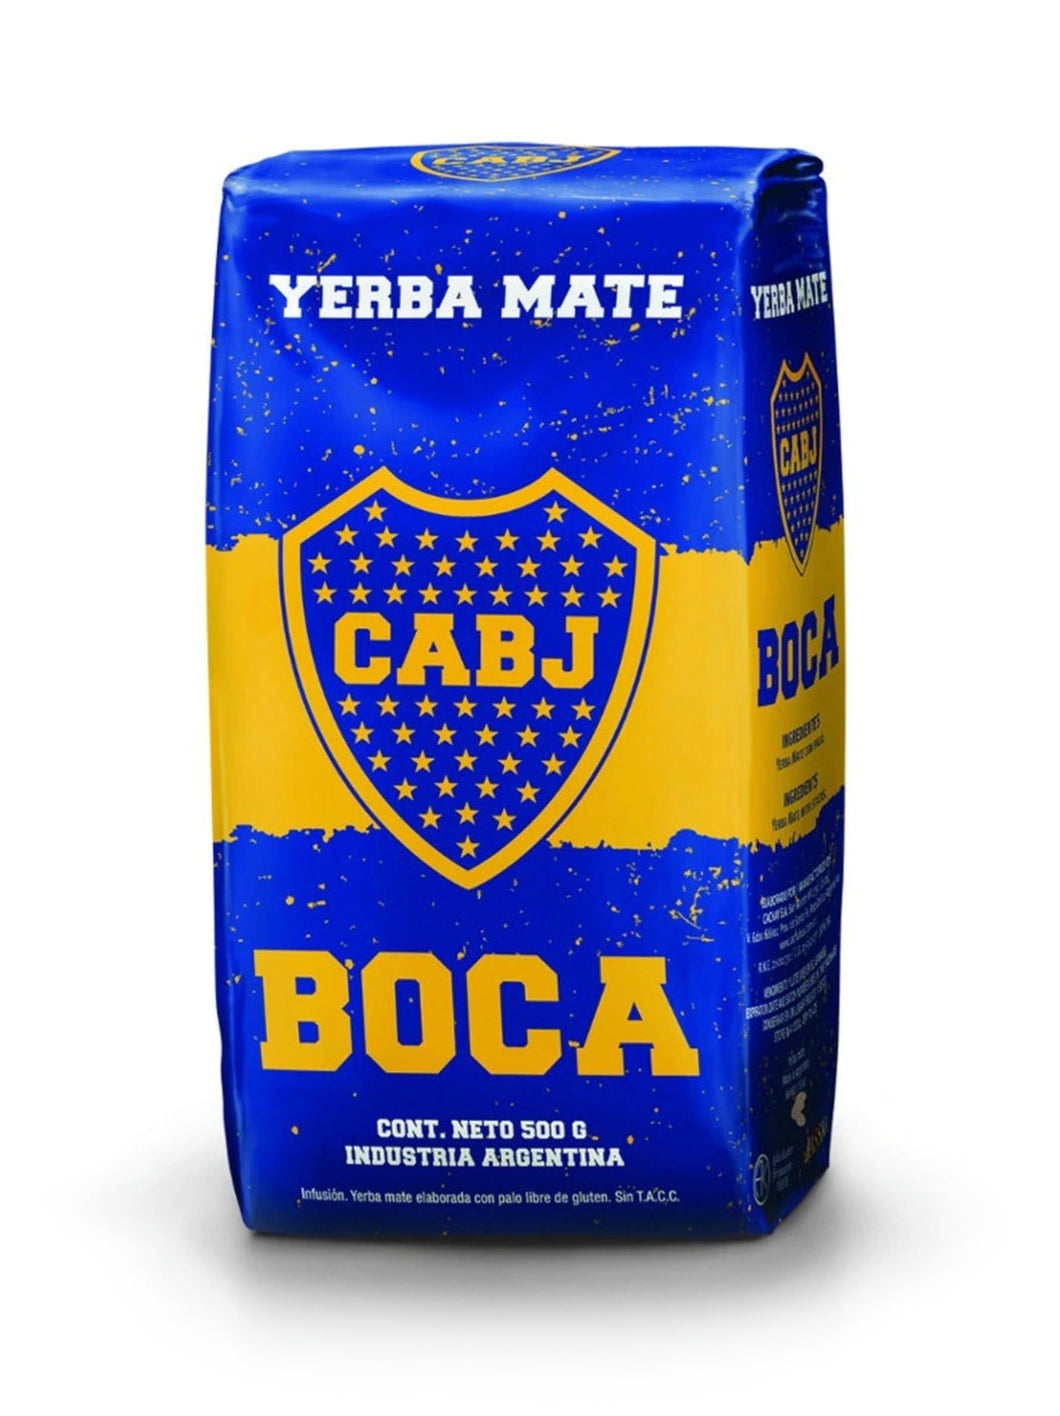 BOCA JR - Yerba Mate con Palo ( with Stems )